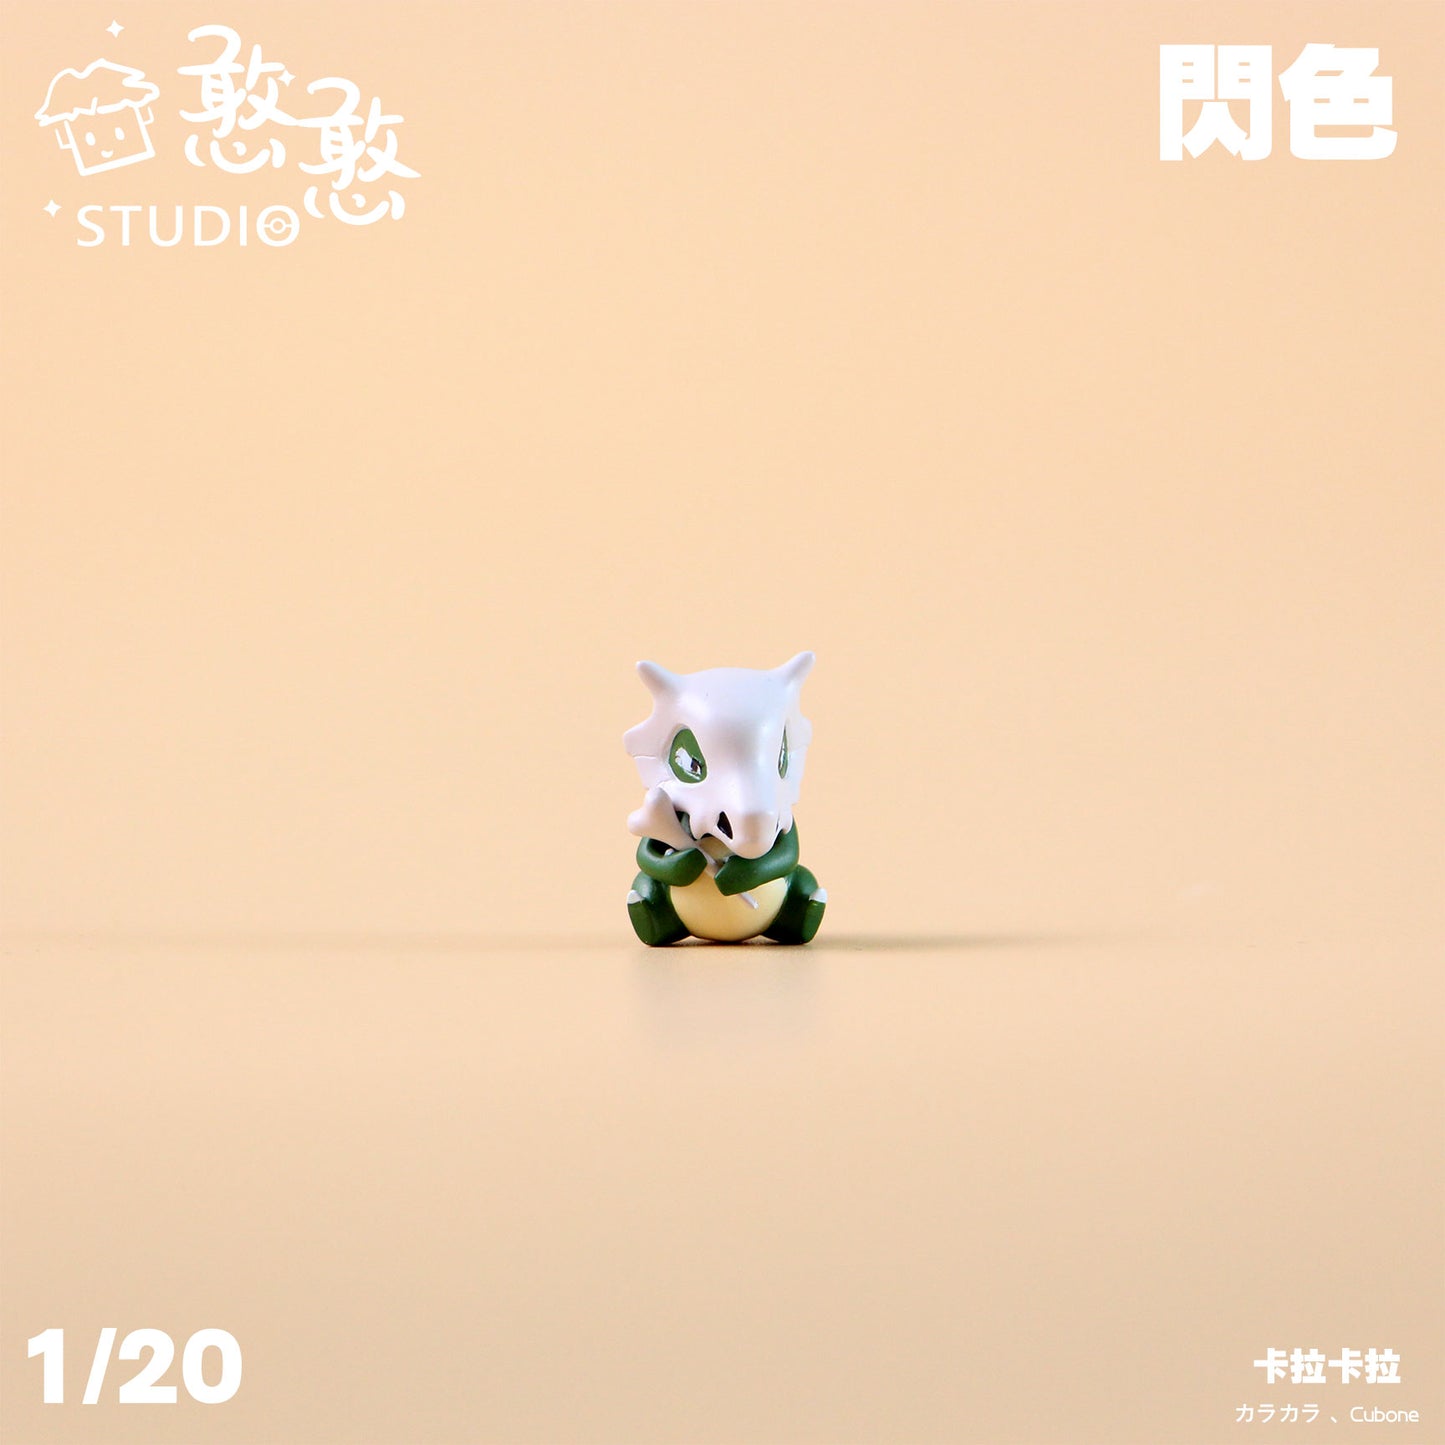 〖Make Up The Balance〗Pokemon Scale World Cubone Marowak #104 #105 1:20 - HH Studio